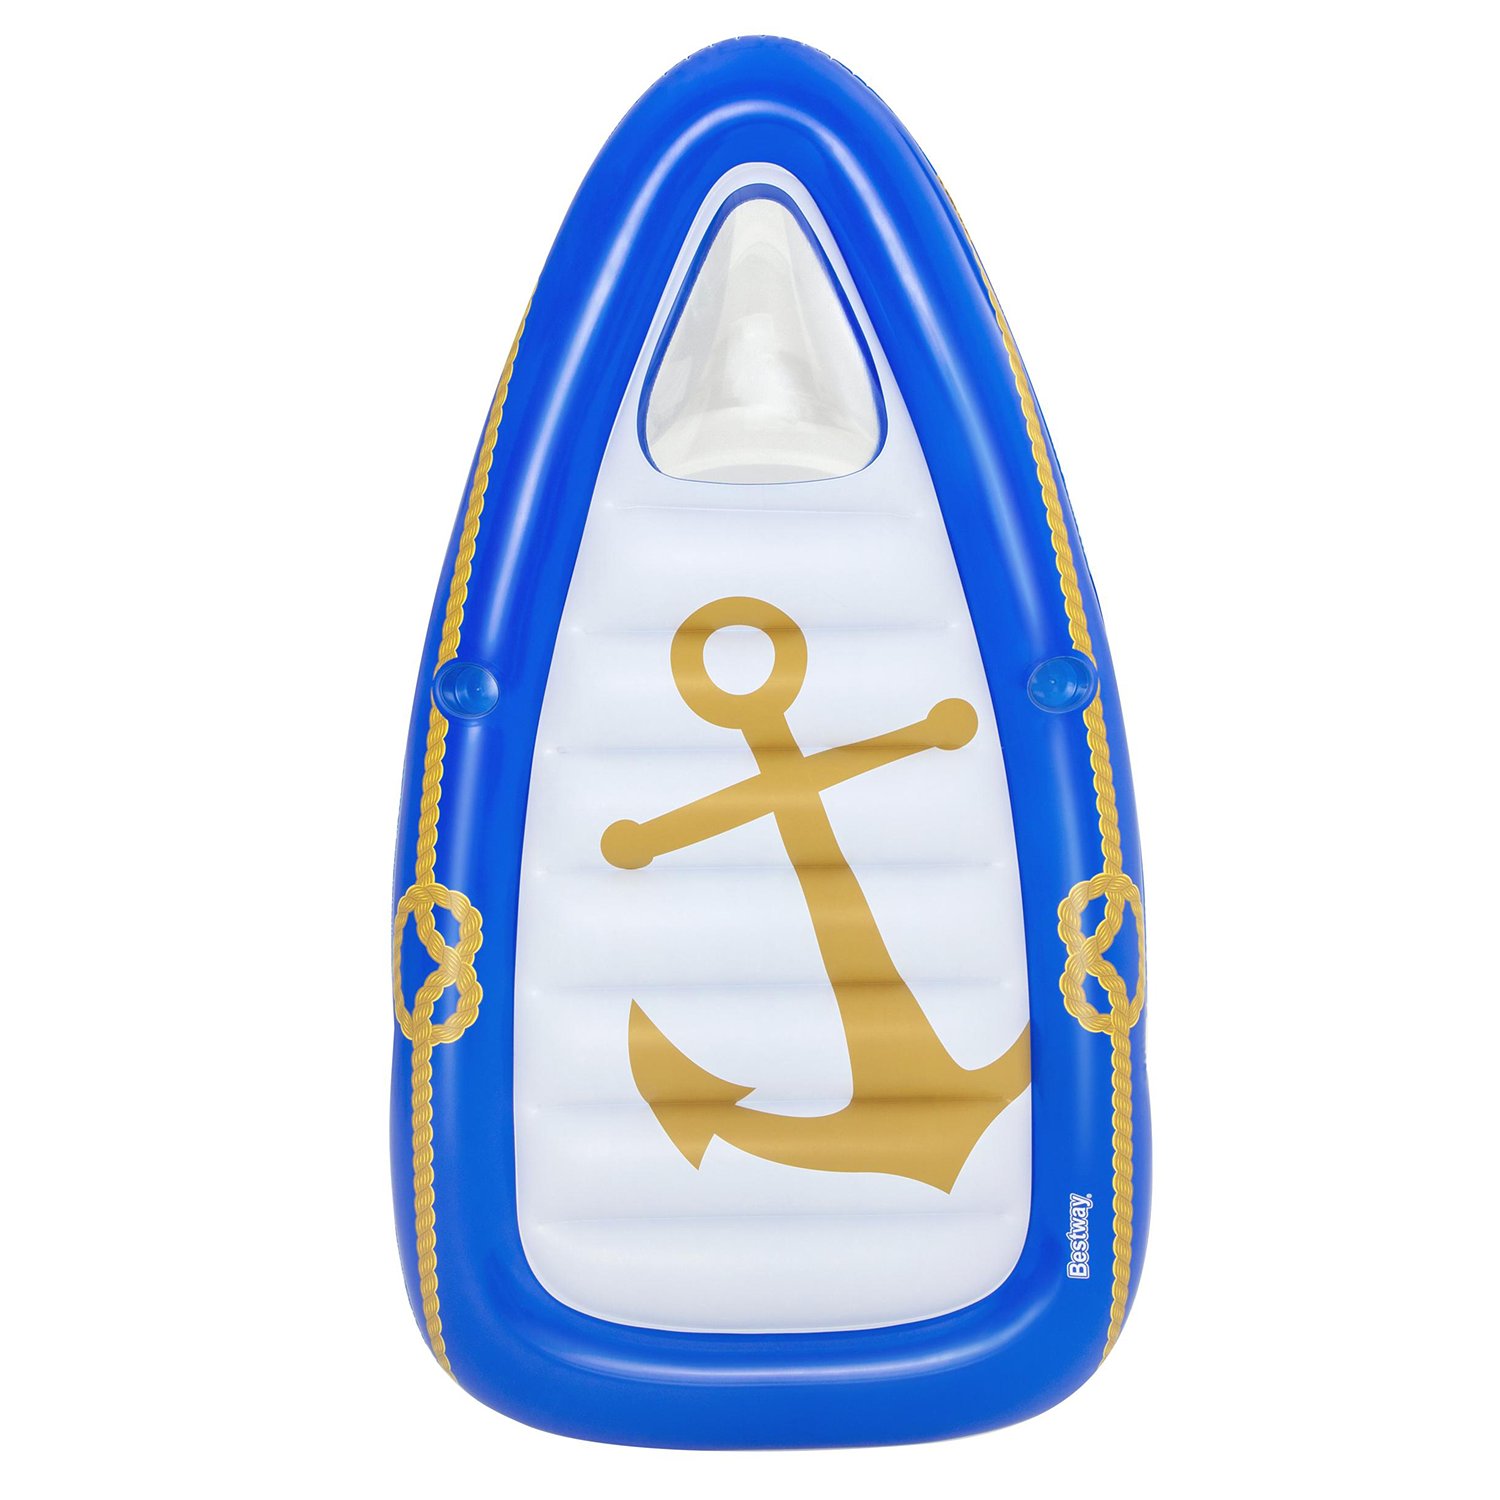 Матрас надувной Bestway nautical paradise 190x107 см, цвет синий - фото 1